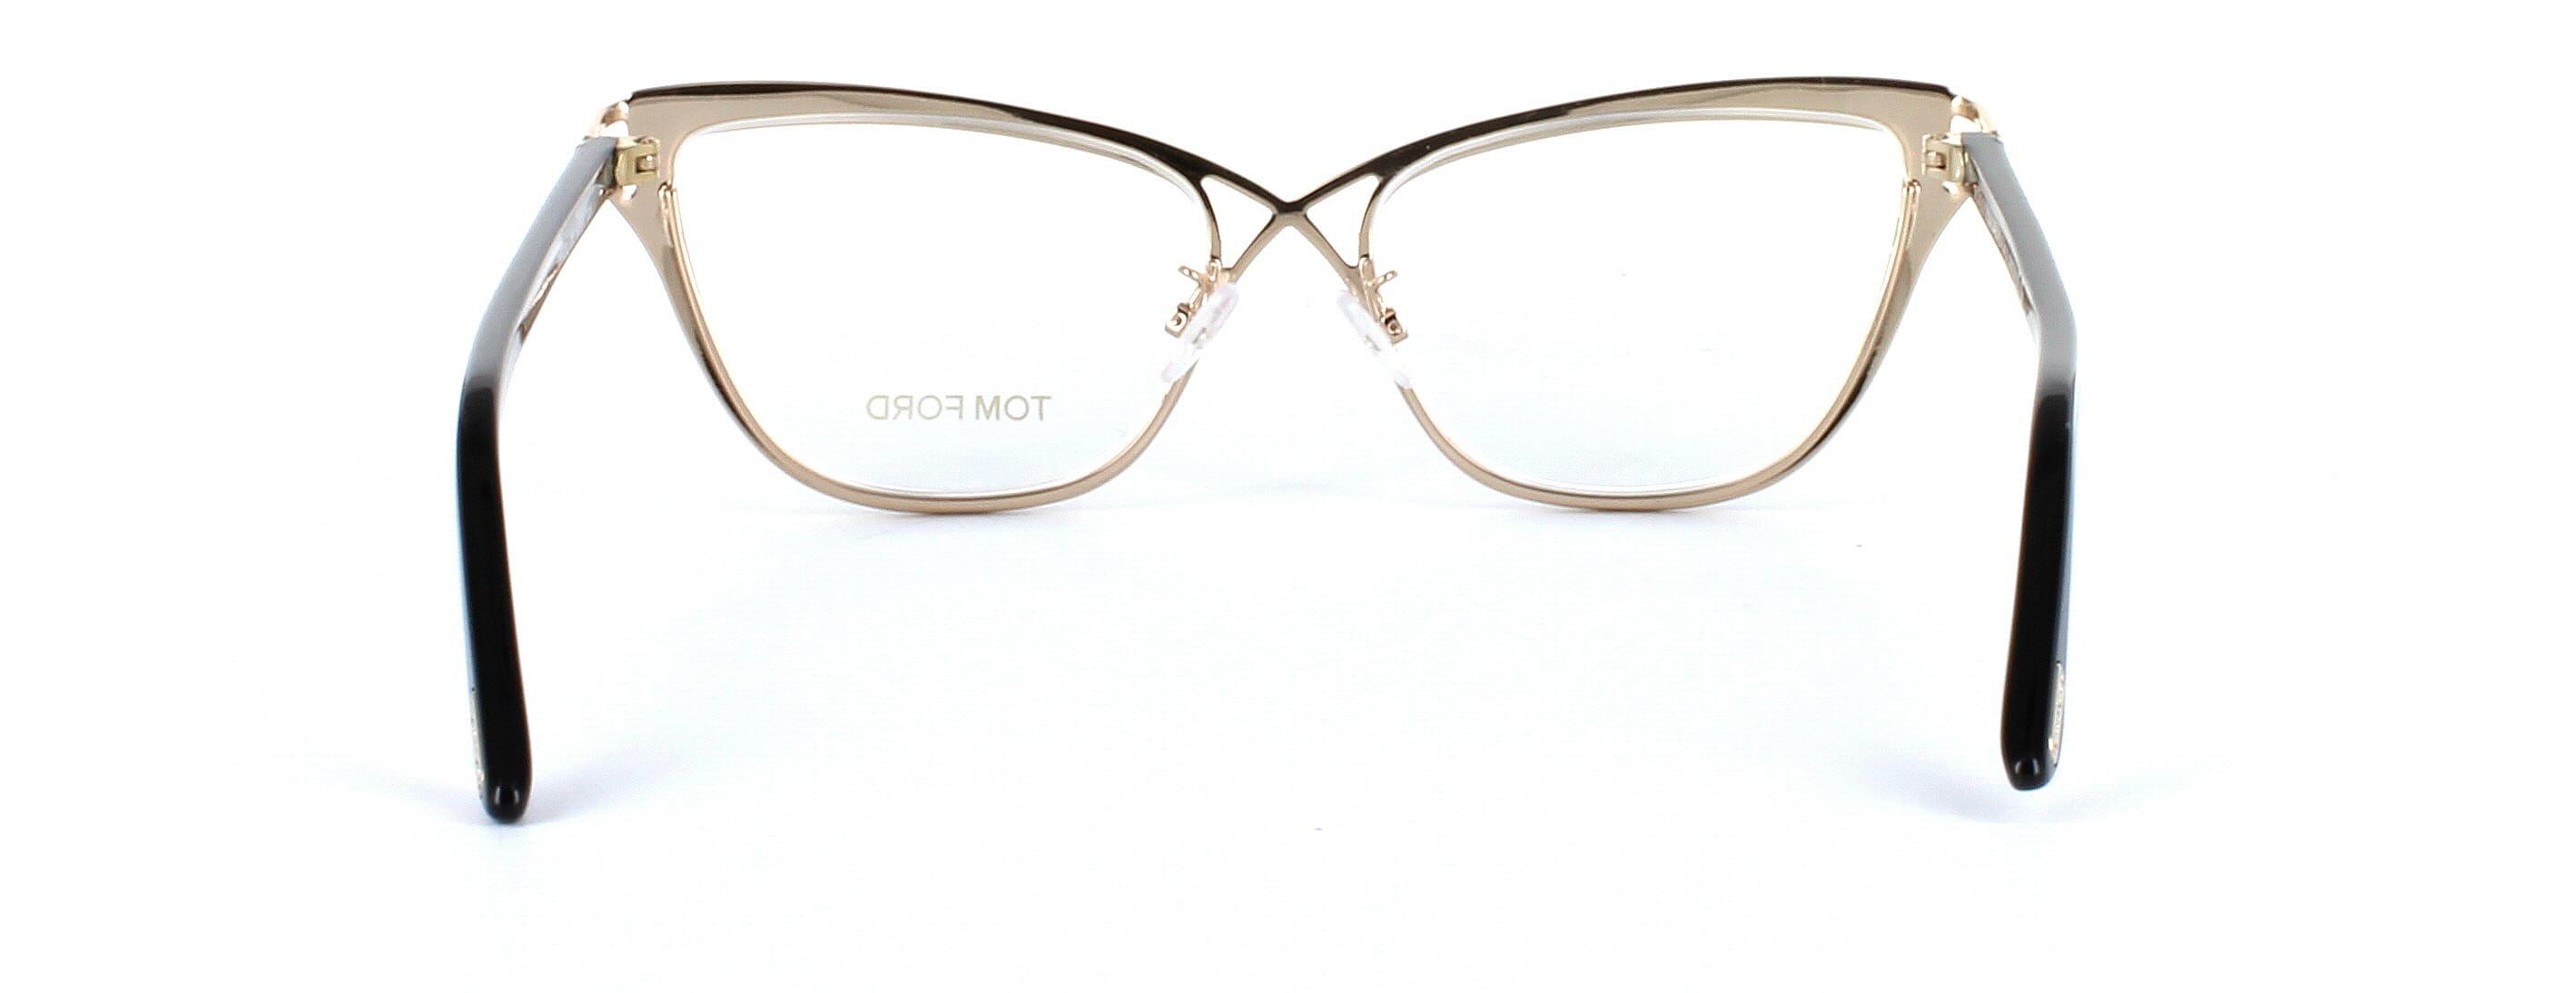 Ladies Tom Ford glasses - black & gold - image 3